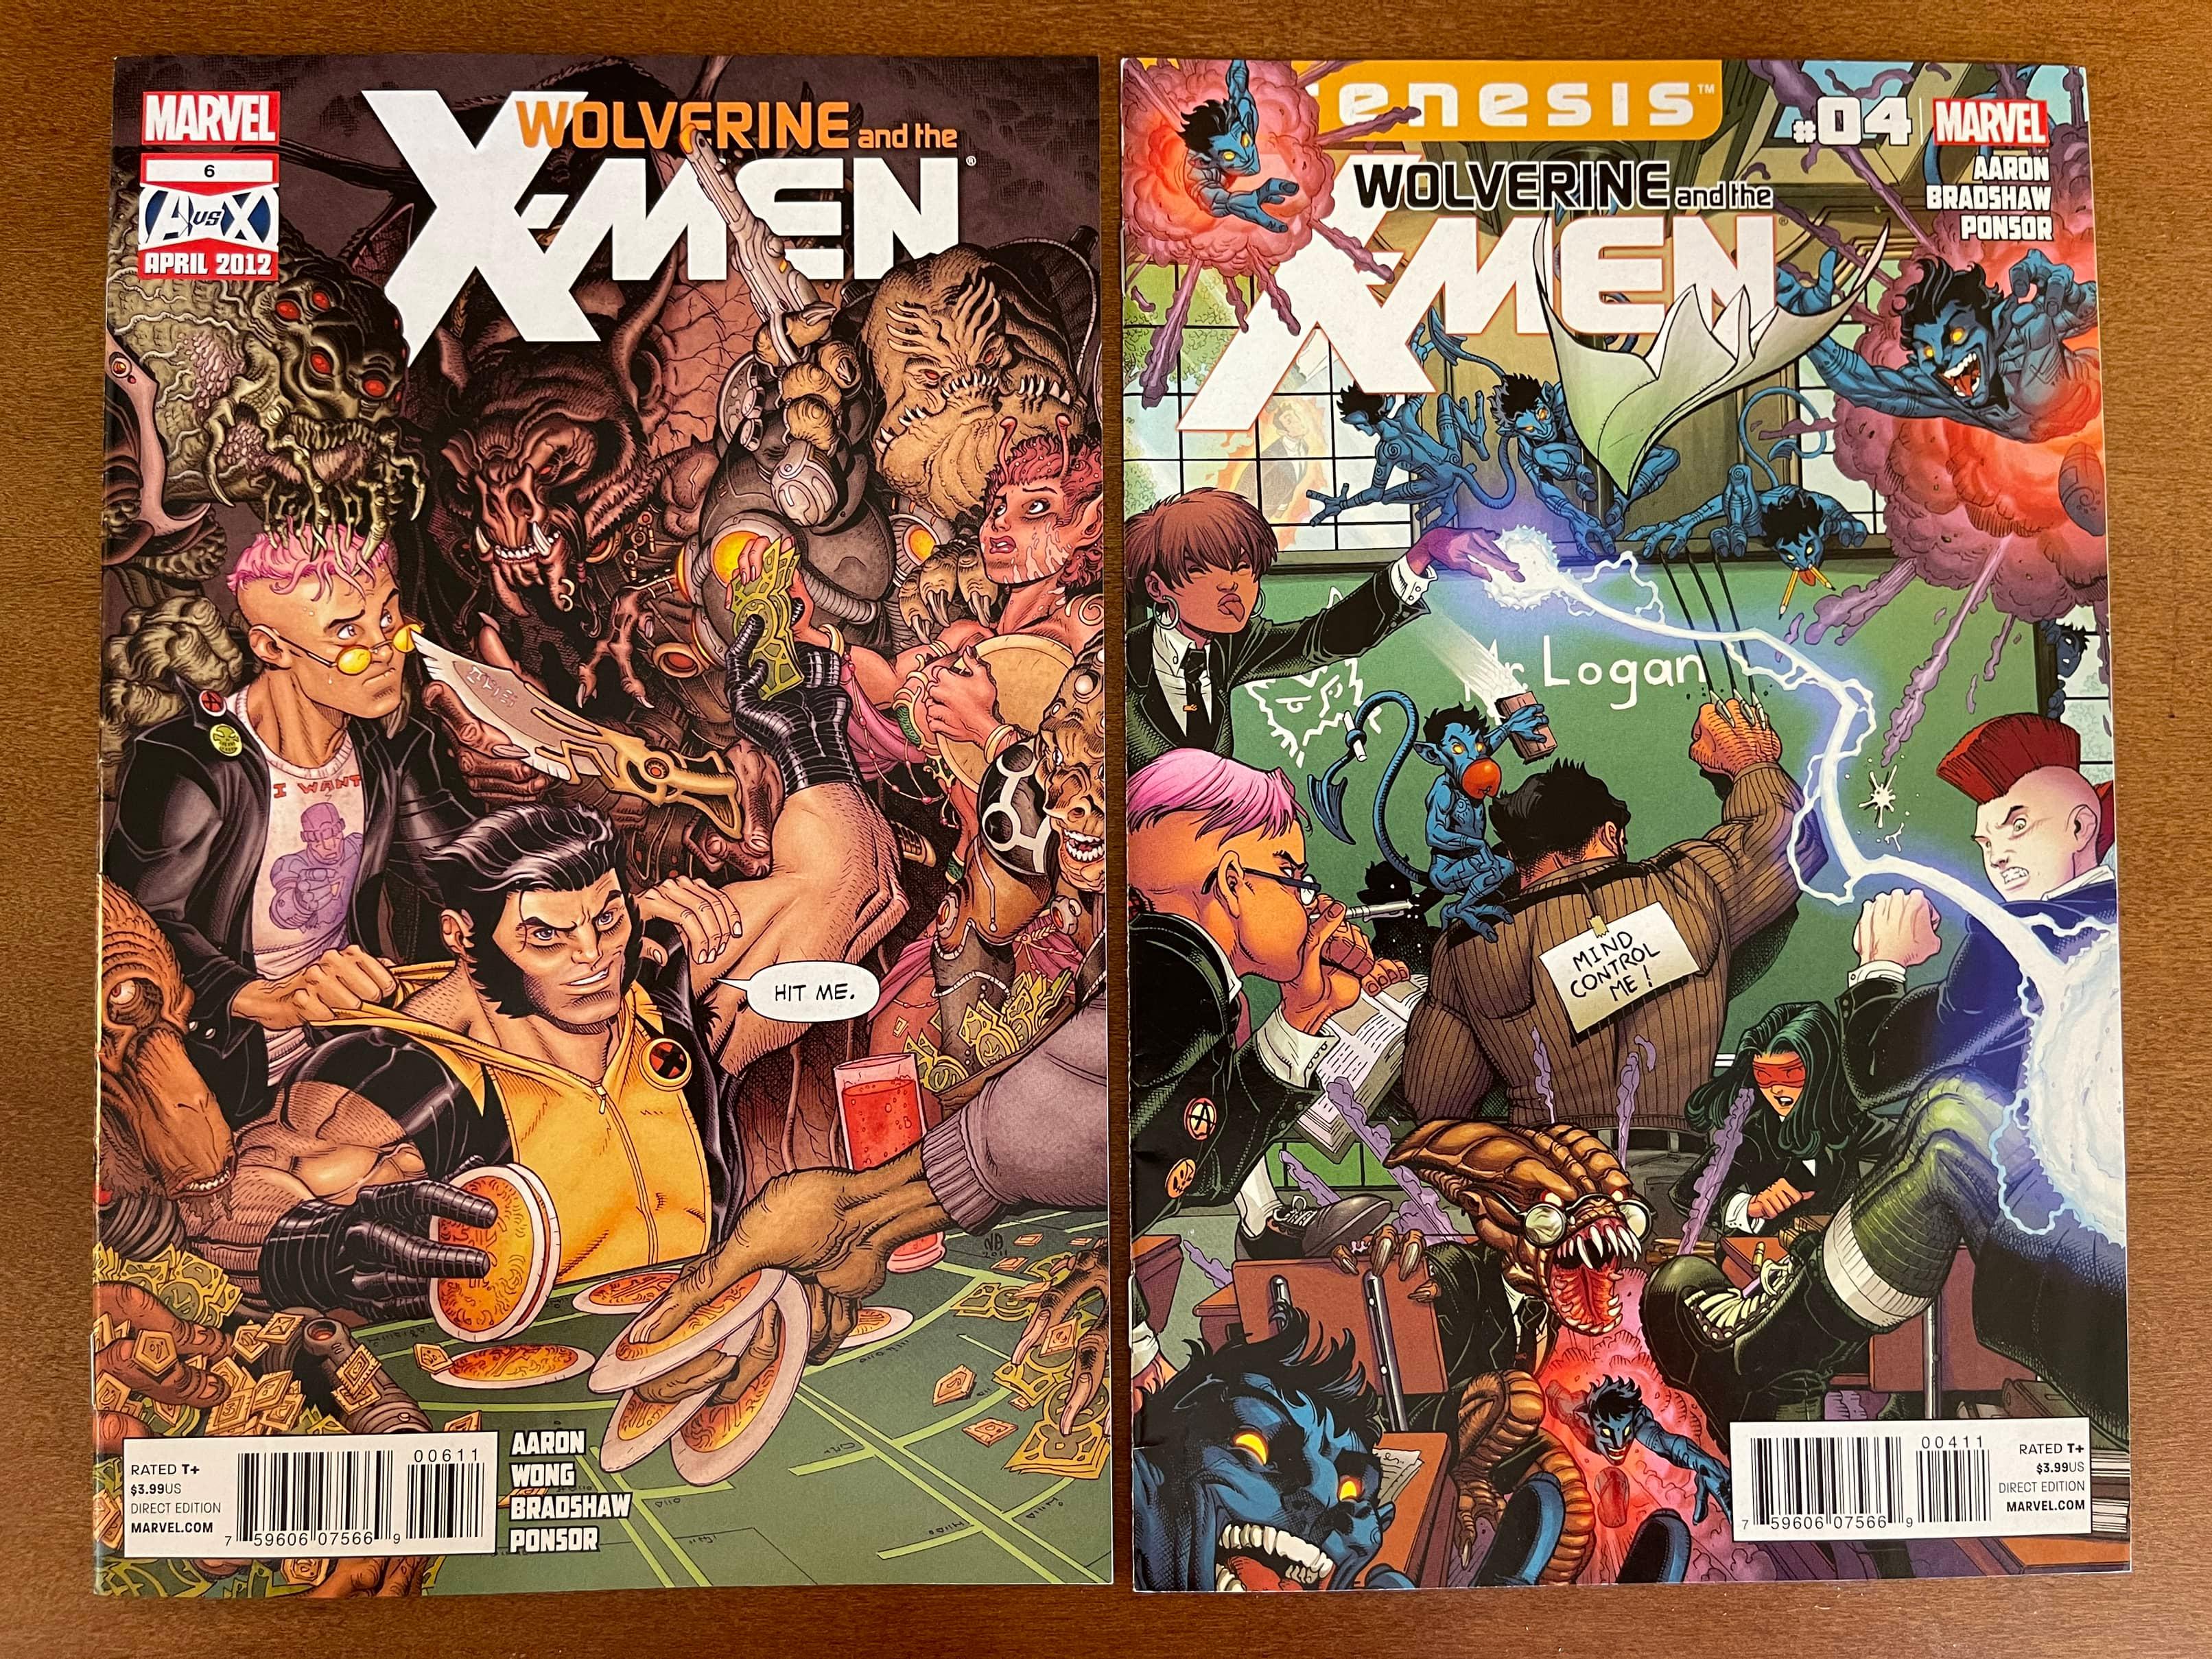 2 Issues Wolverine and the XMen Comics #4 #6 Marvel Comics Aaron Bradshaw Ponsor